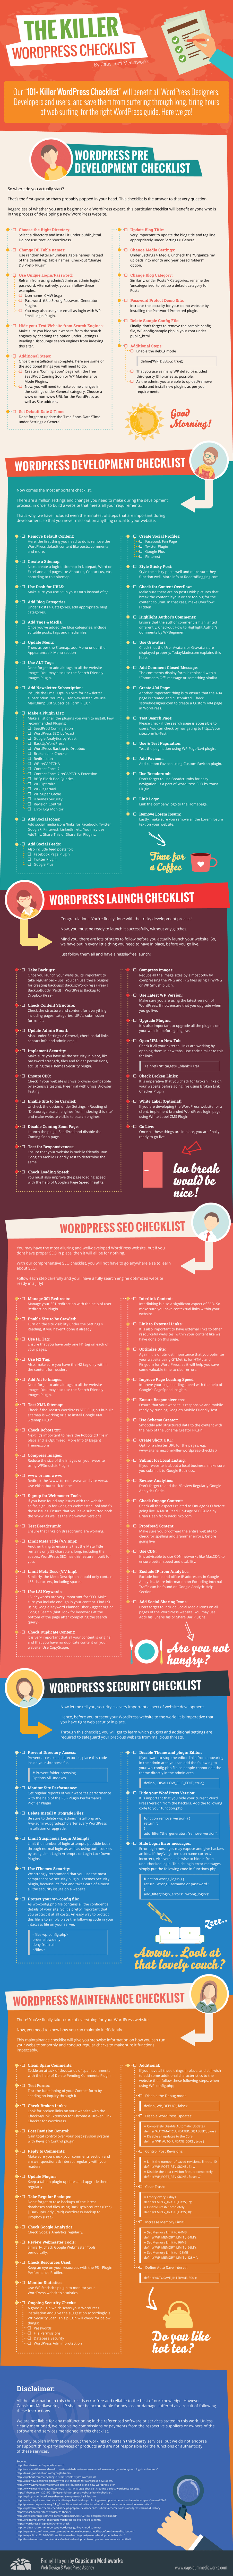 WordPress Checklist Infographic - Capsicum Mediaworks